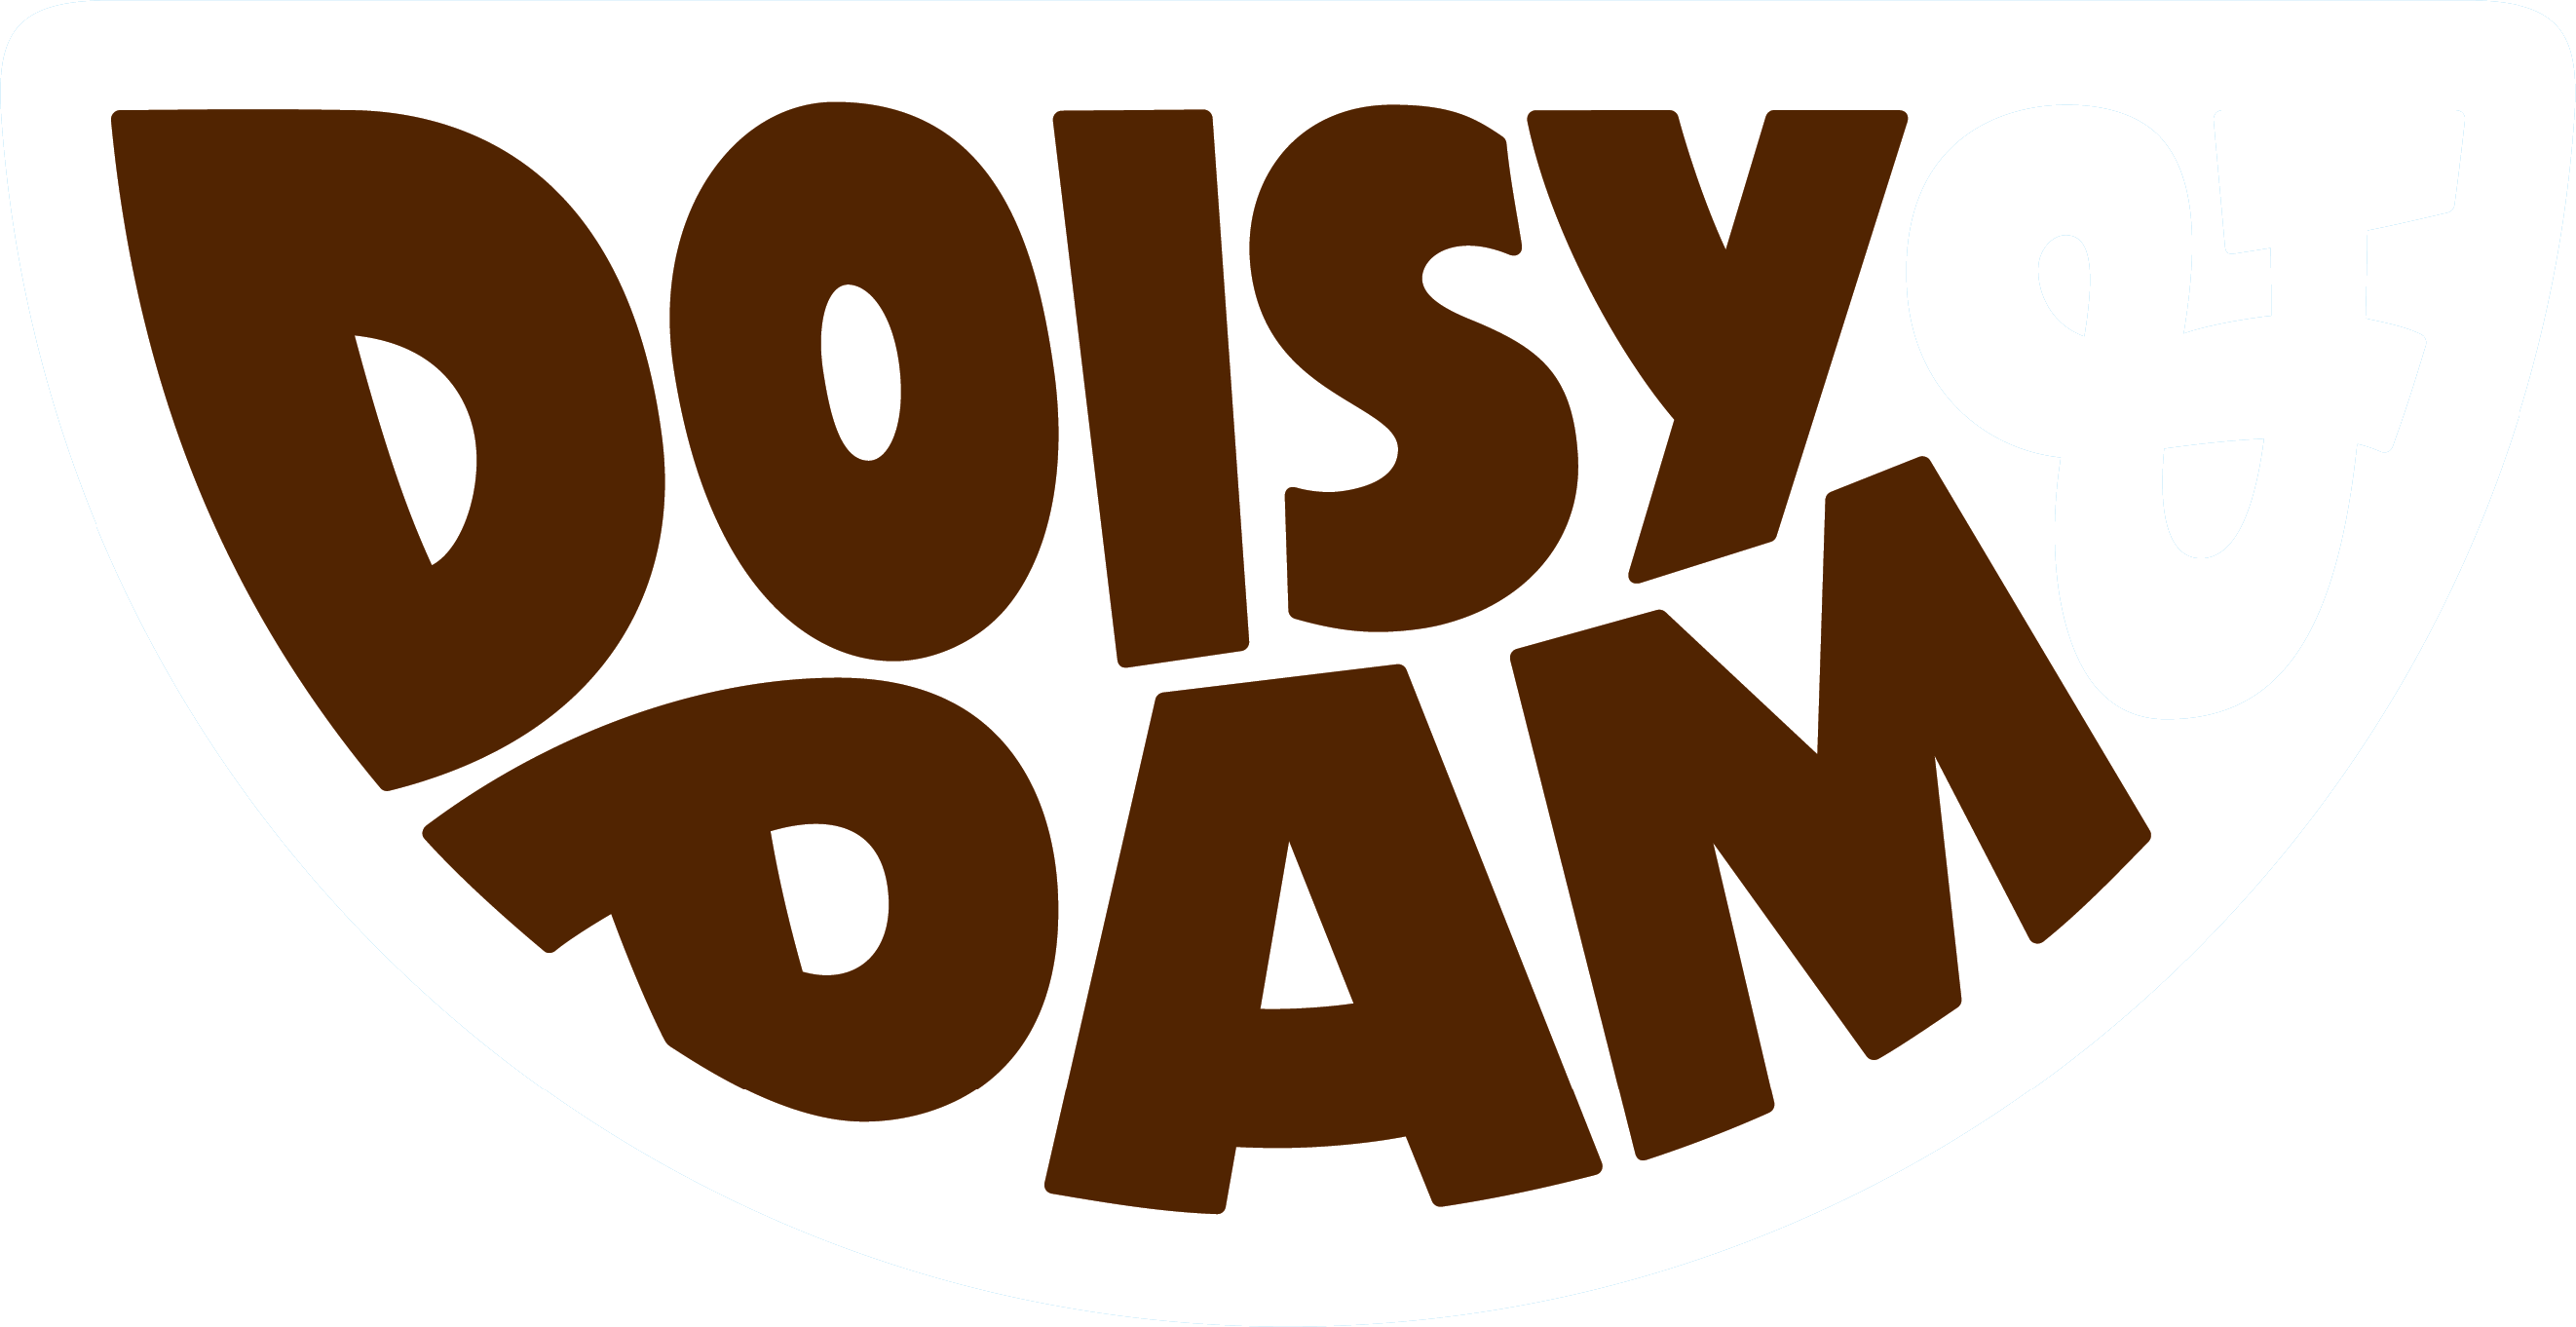 Doisy & Dam